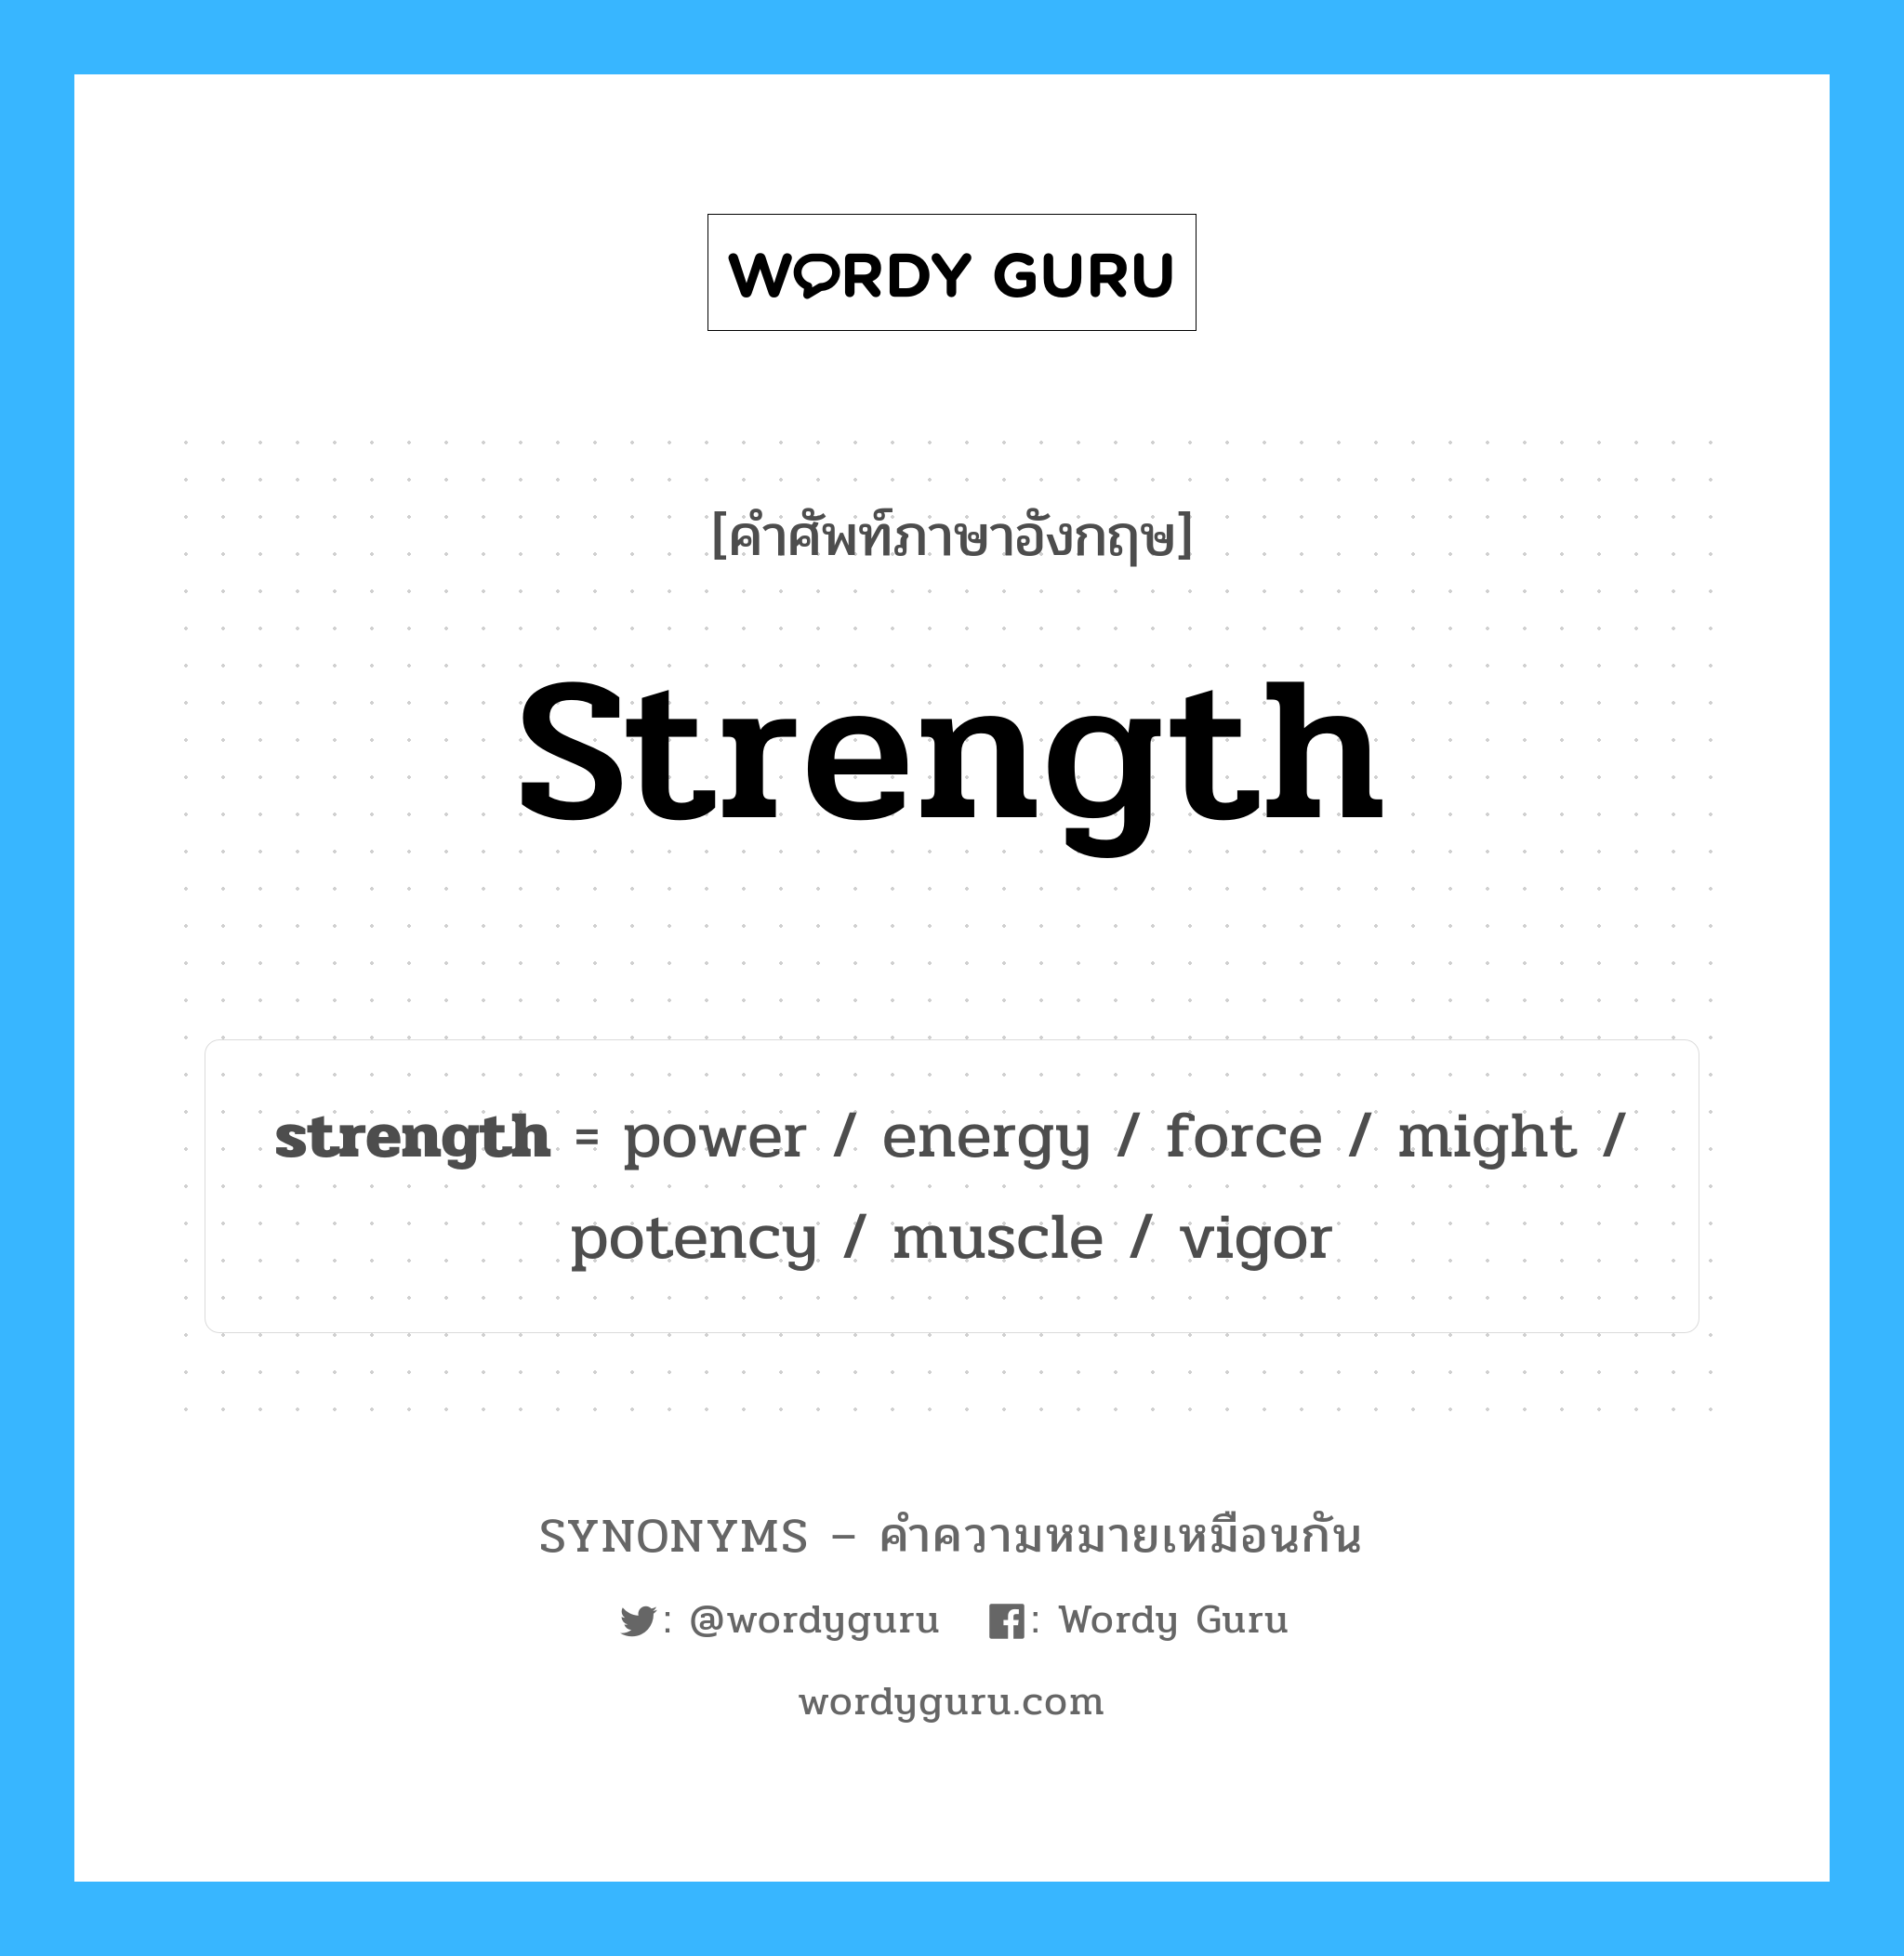 might เป็นหนึ่งใน strength และมีคำอื่น ๆ อีกดังนี้, คำศัพท์ภาษาอังกฤษ might ความหมายคล้ายกันกับ strength แปลว่า อาจ หมวด strength